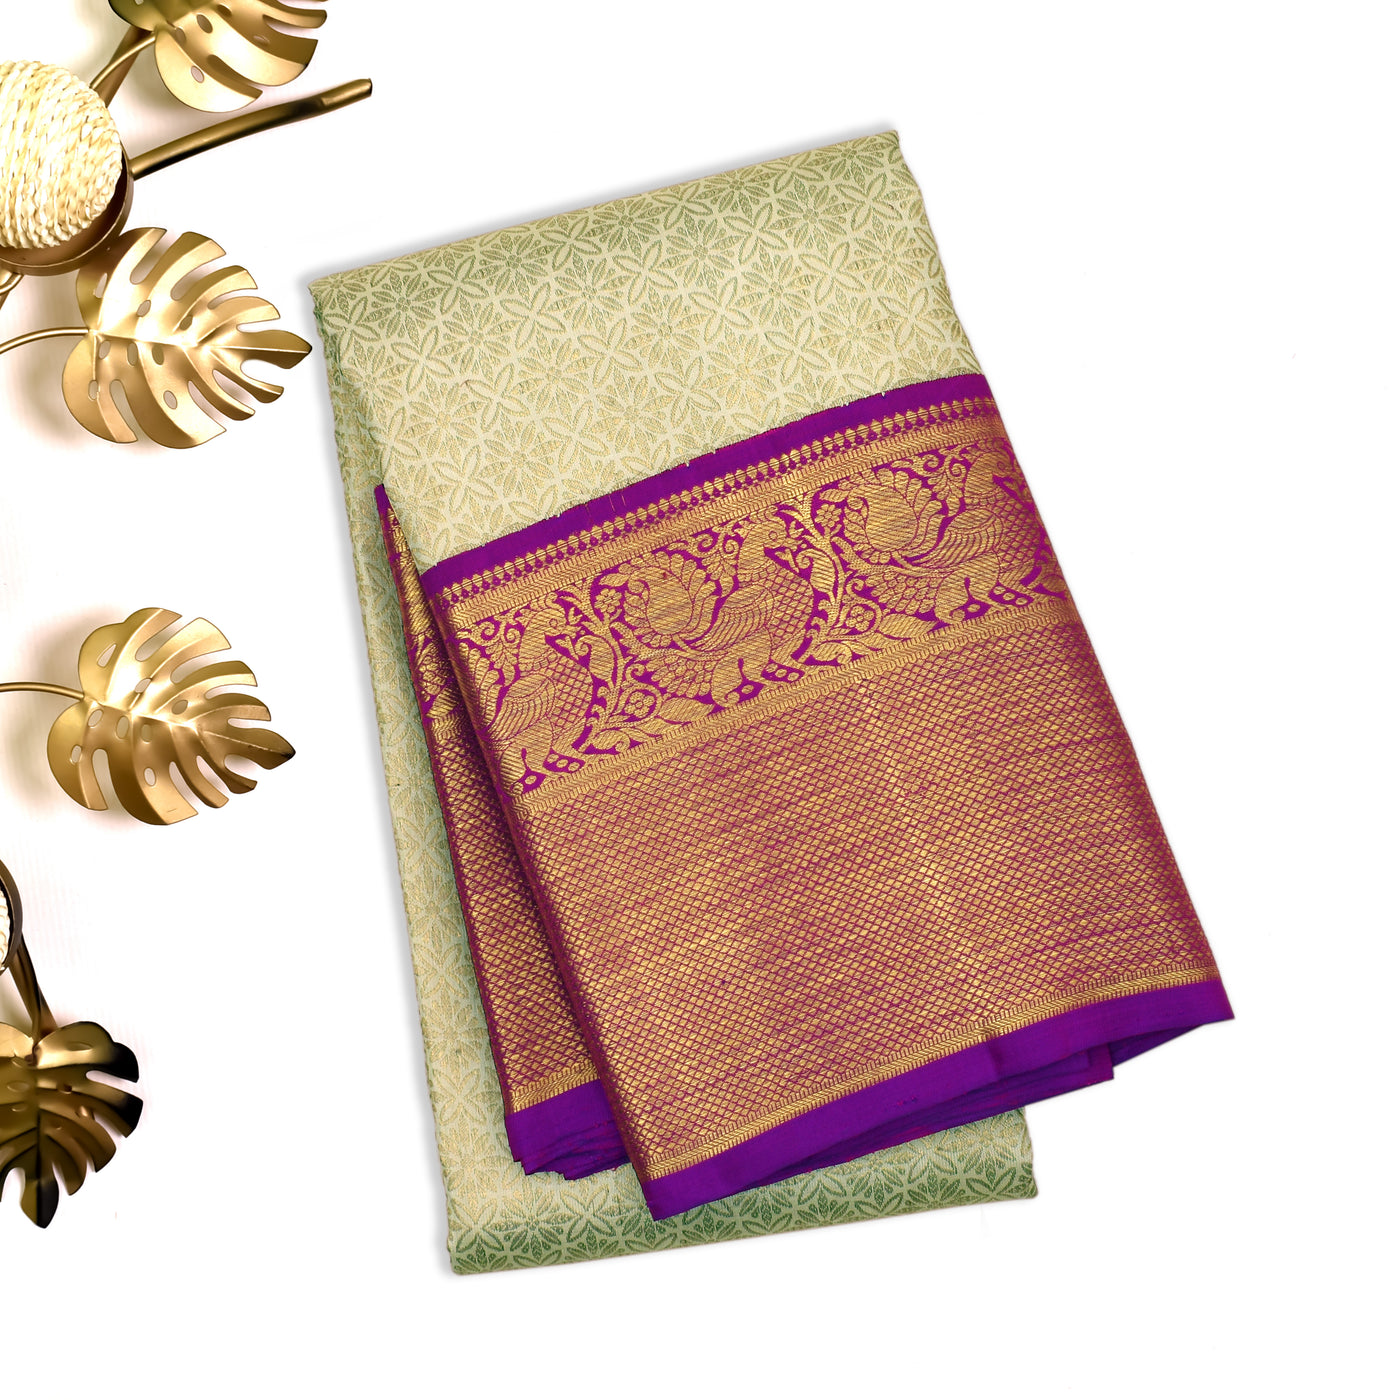 Off White Kanchipuram Silk Saree with Small Flower Design